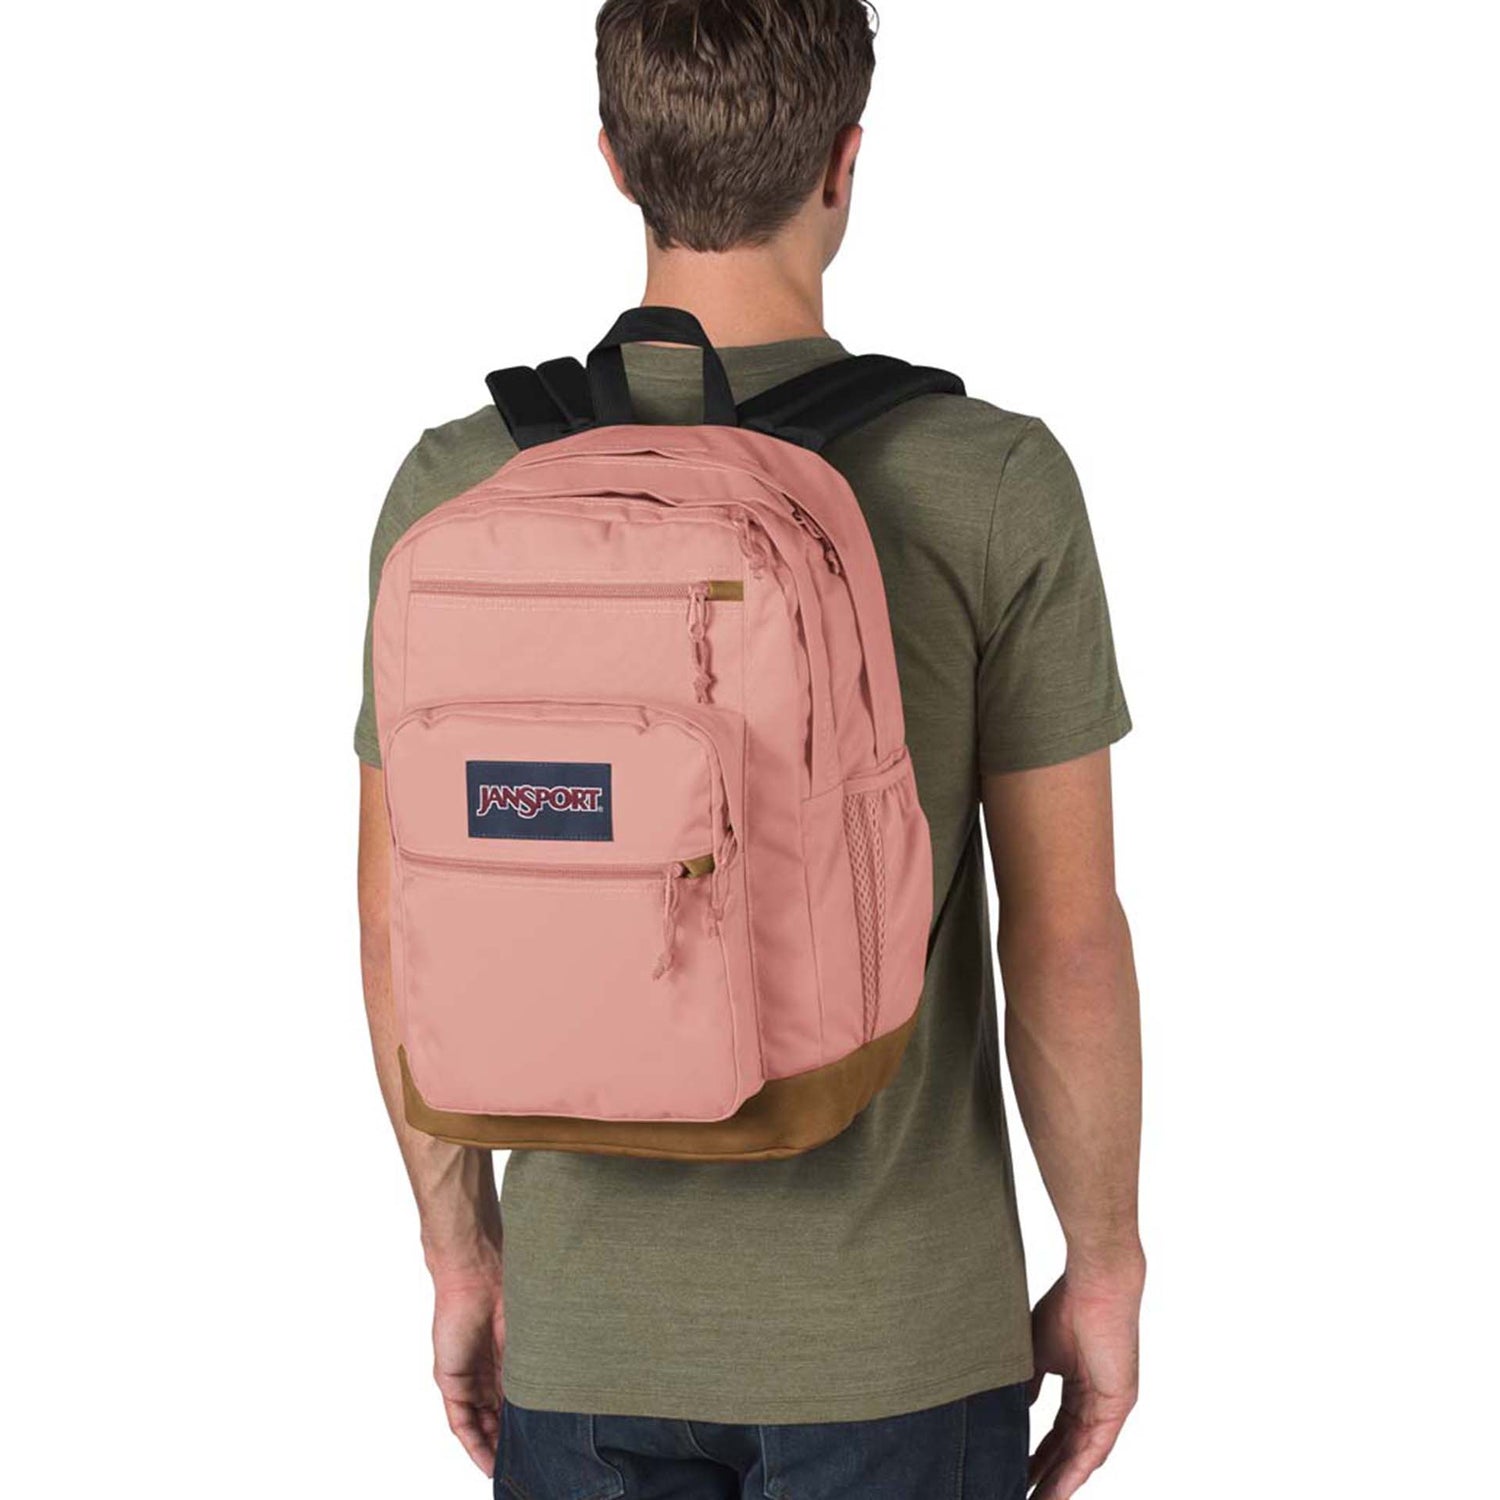 Cool Student Backpack - Bentley